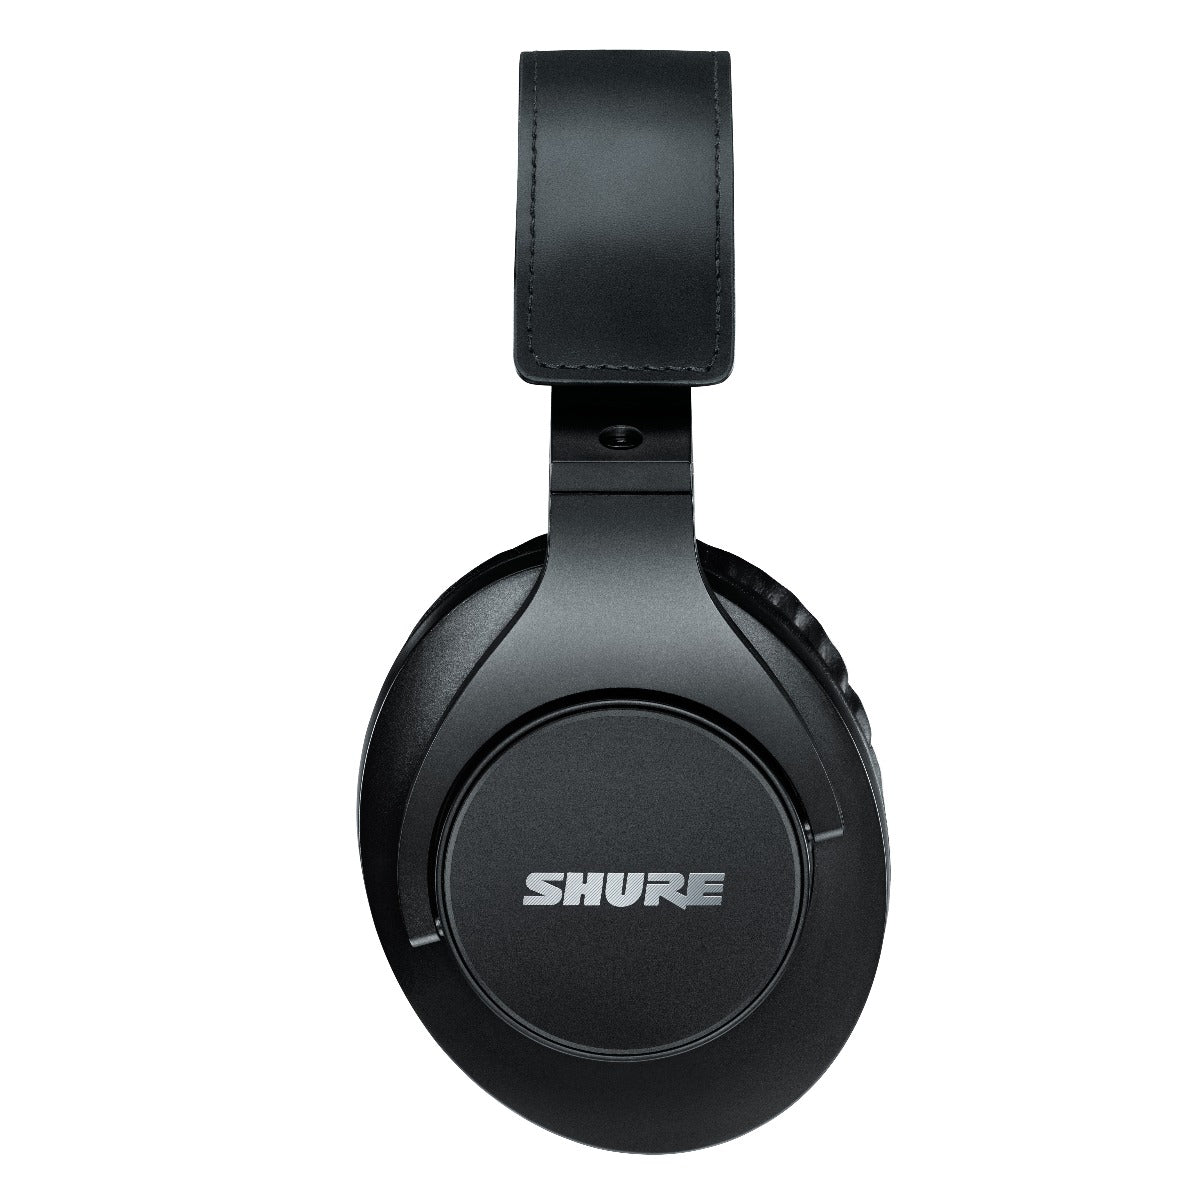 Shure SRH440A Professional Studio Headphones, View 4